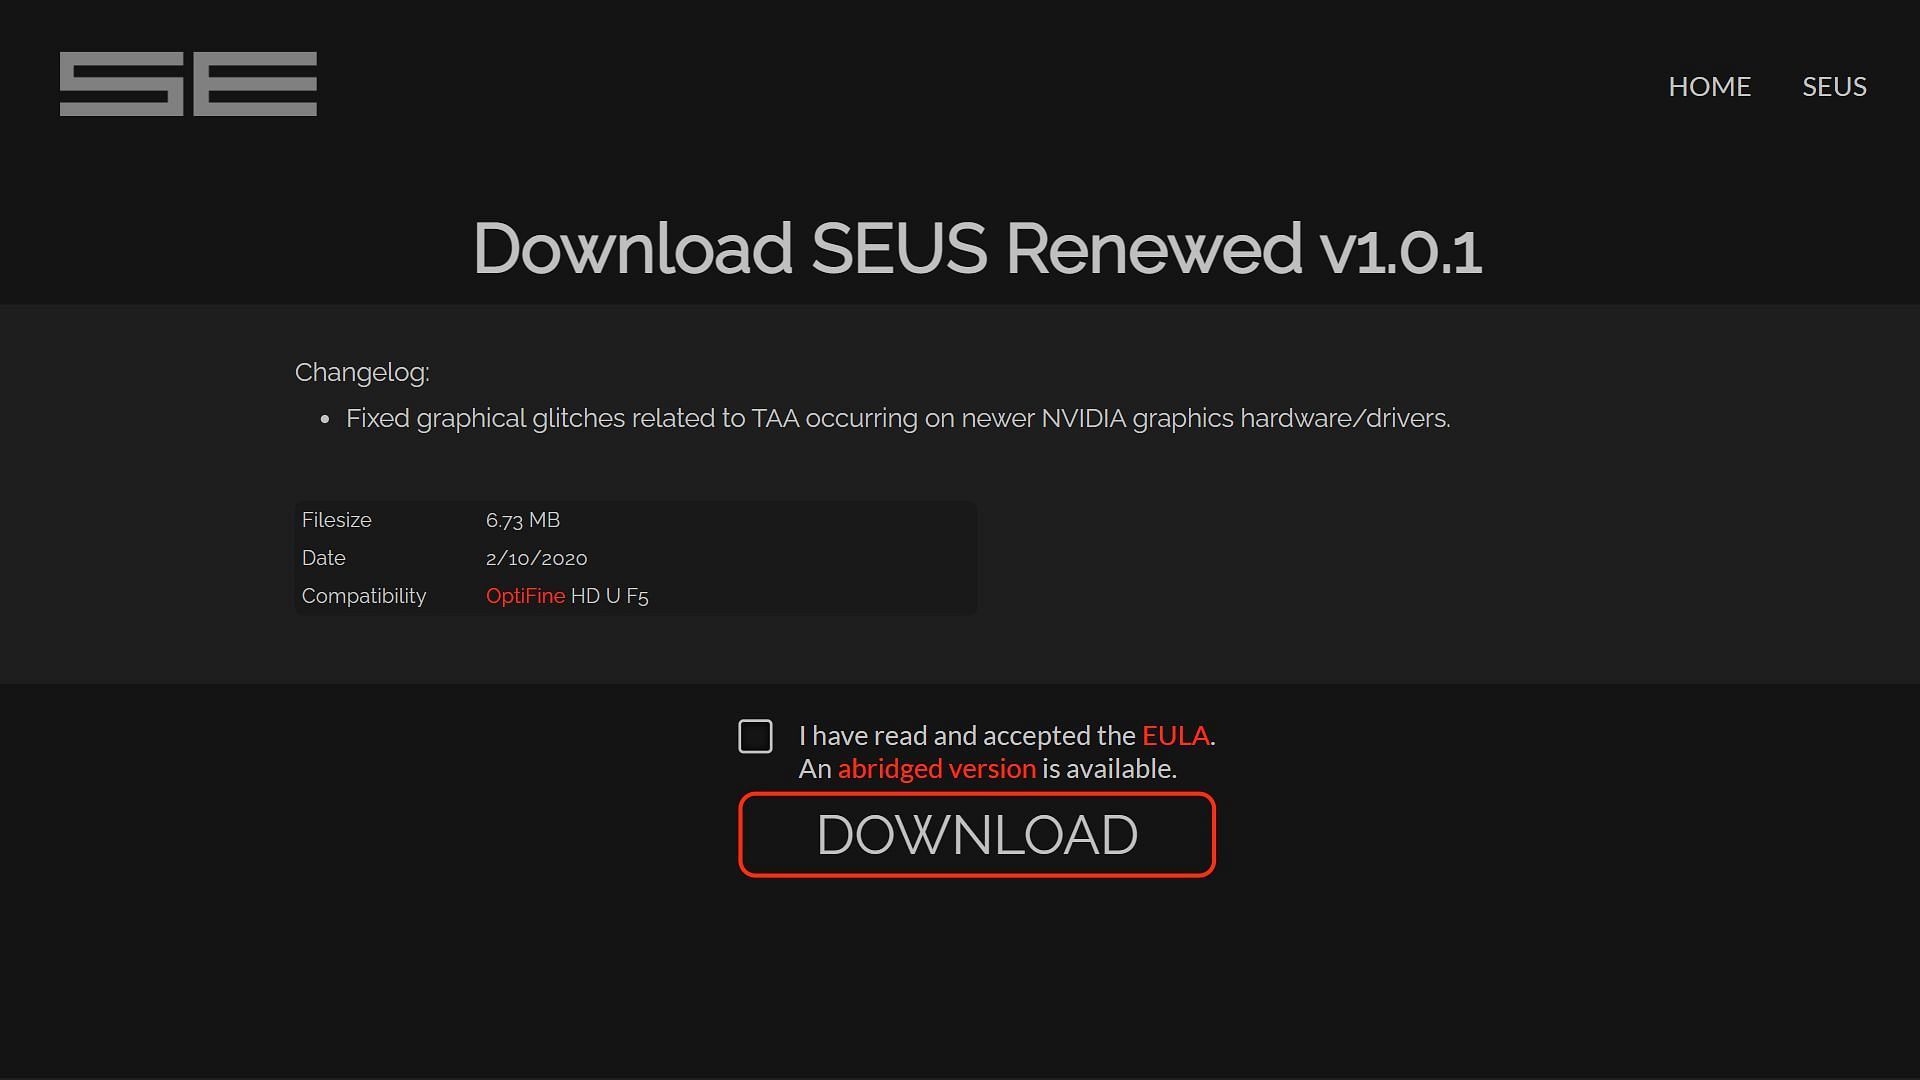 Official SEUS Renewed v1.0.1 download page (Image via Sportskeeda)